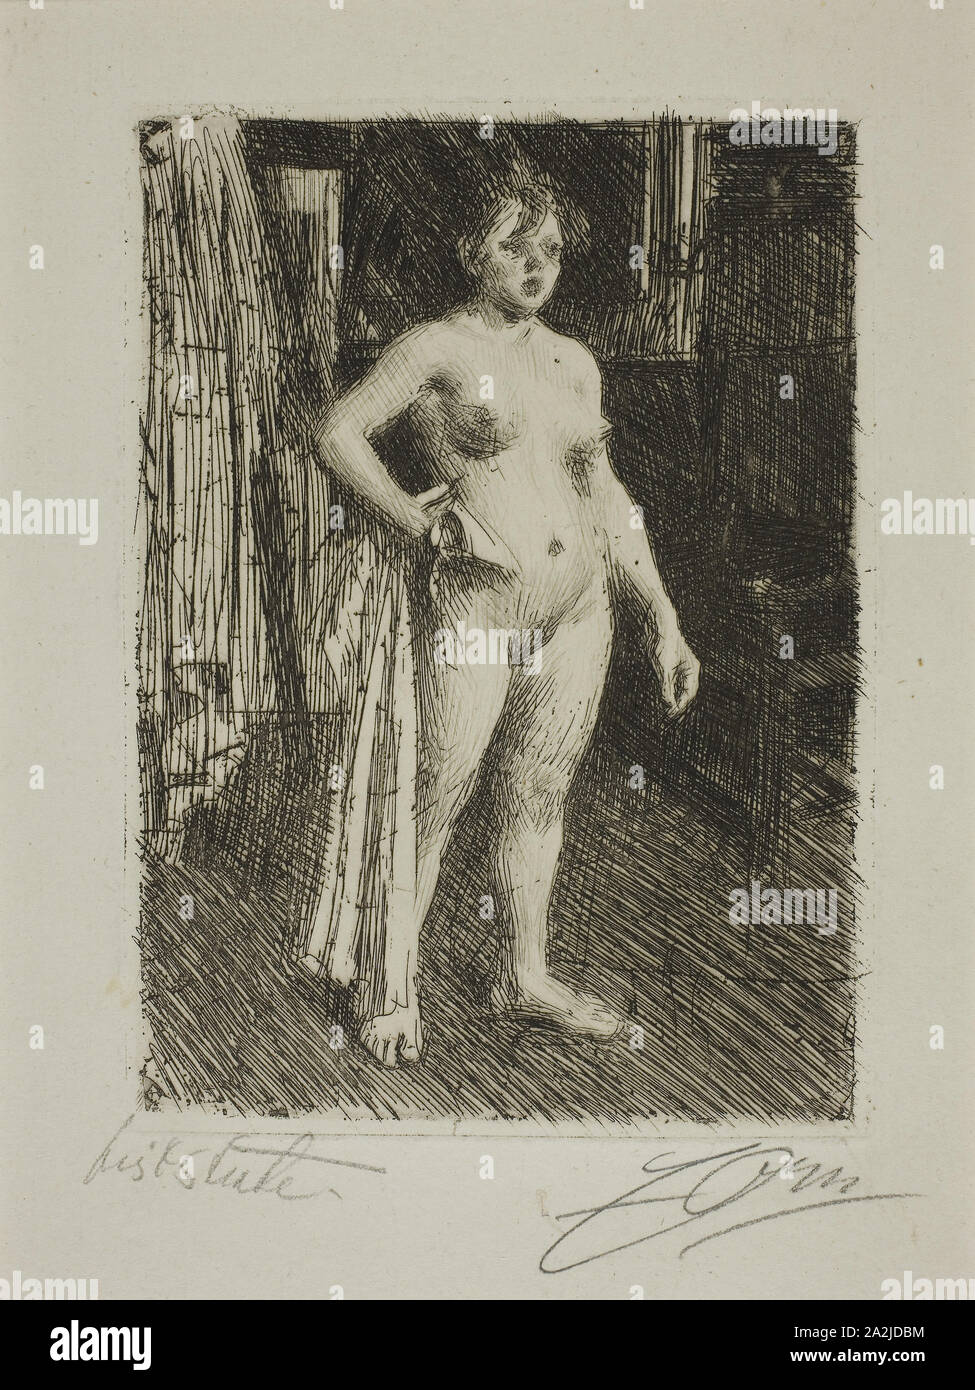 Venus de la Villette, 1893, Anders Zorn, Swedish, 1860-1920, Sweden, Etching on ivory laid paper, 135 x 96 mm (image), 139 x 101 mm (plate), 427 x 344 mm (sheet Stock Photo